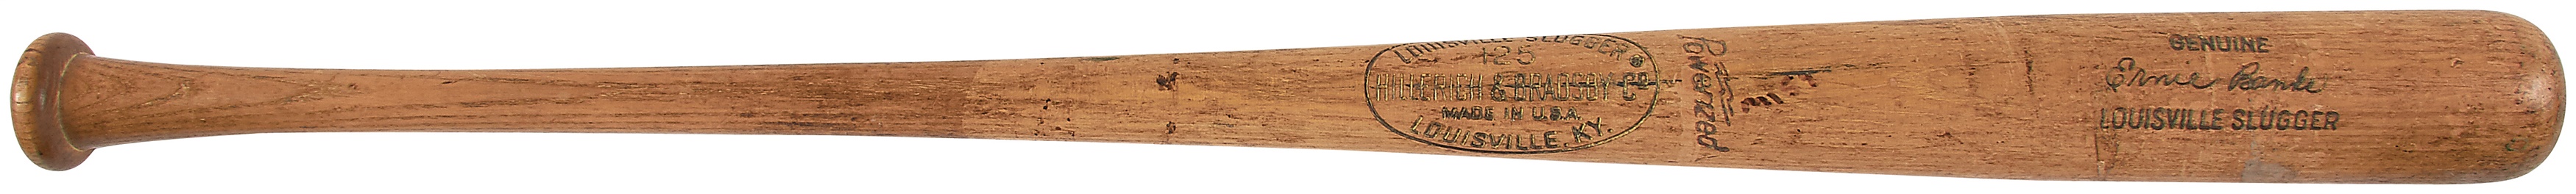 1969-72 Ernie Banks Game Used Louisville Slugger M159 Bat